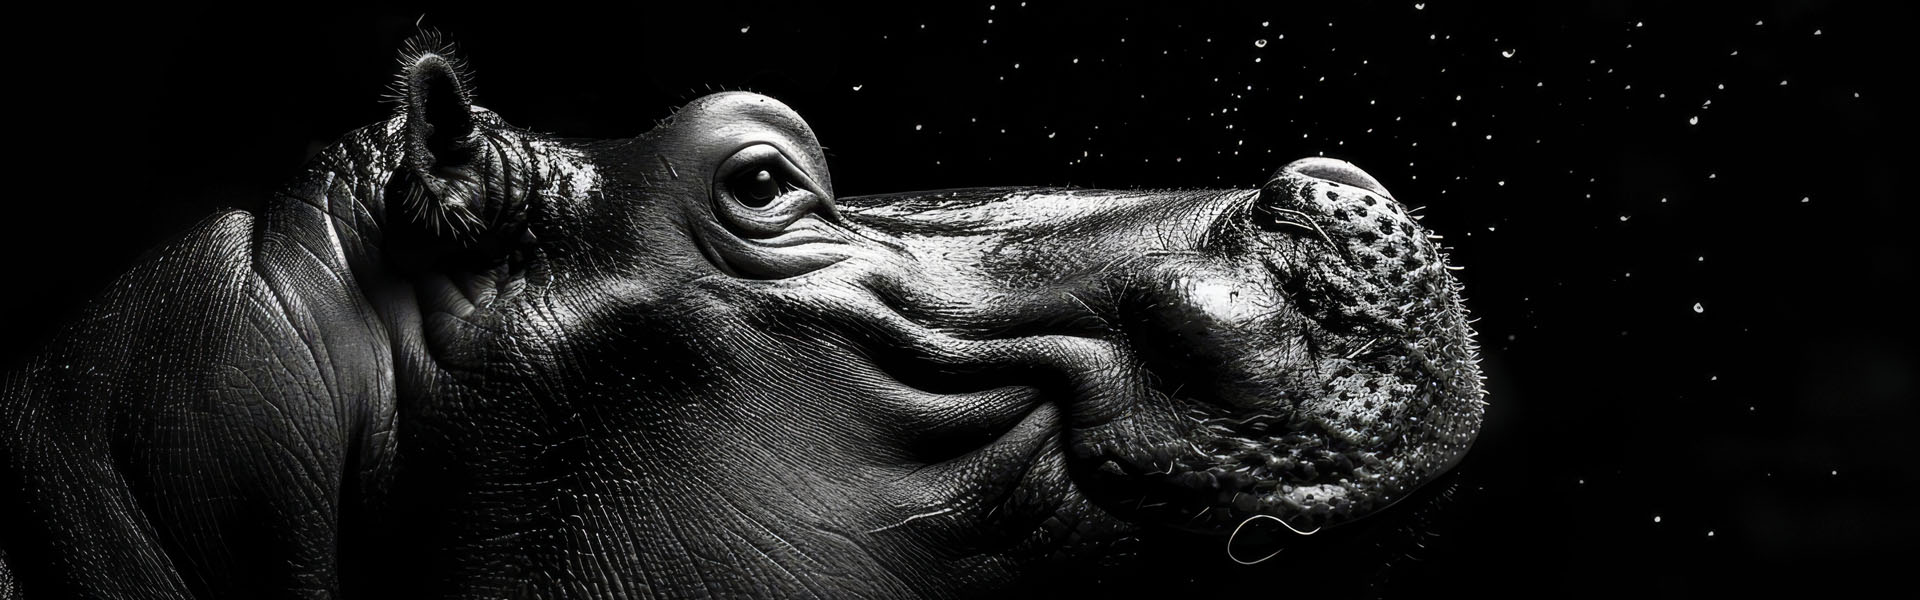 Hippopotamus head dramatically lit against a starry night